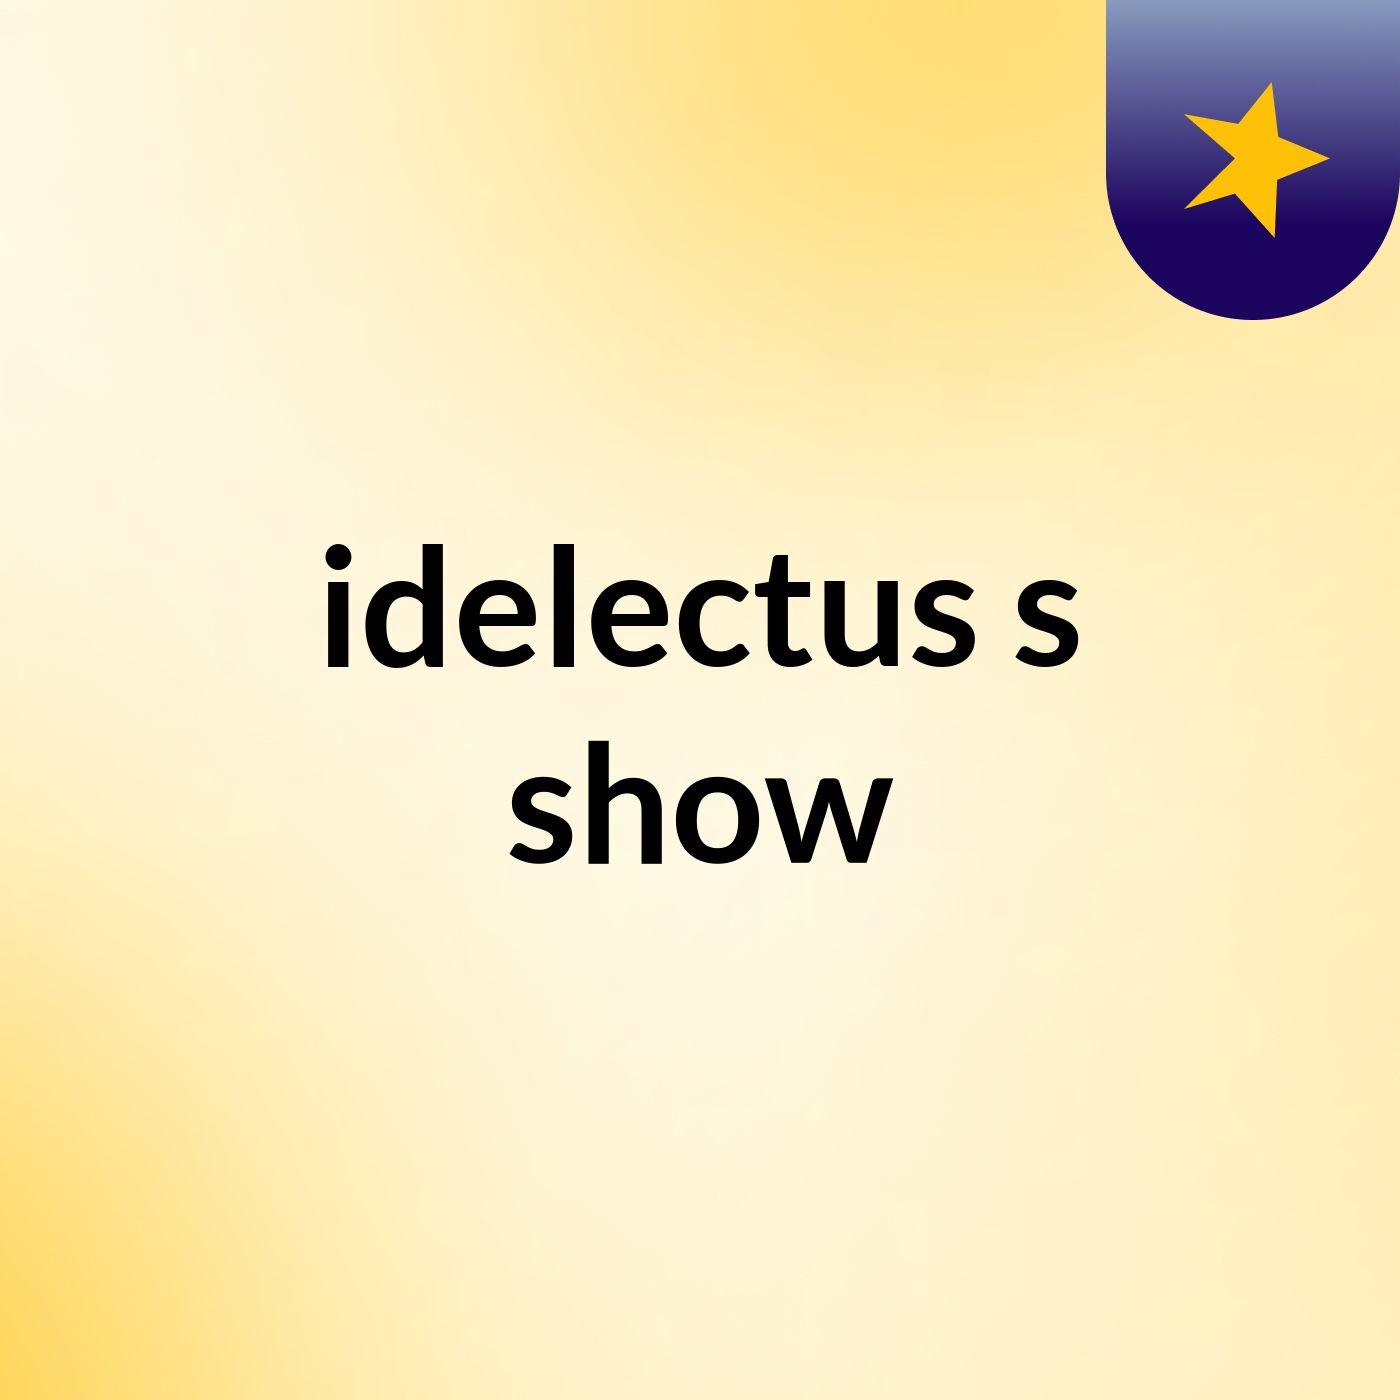 idelectus's show